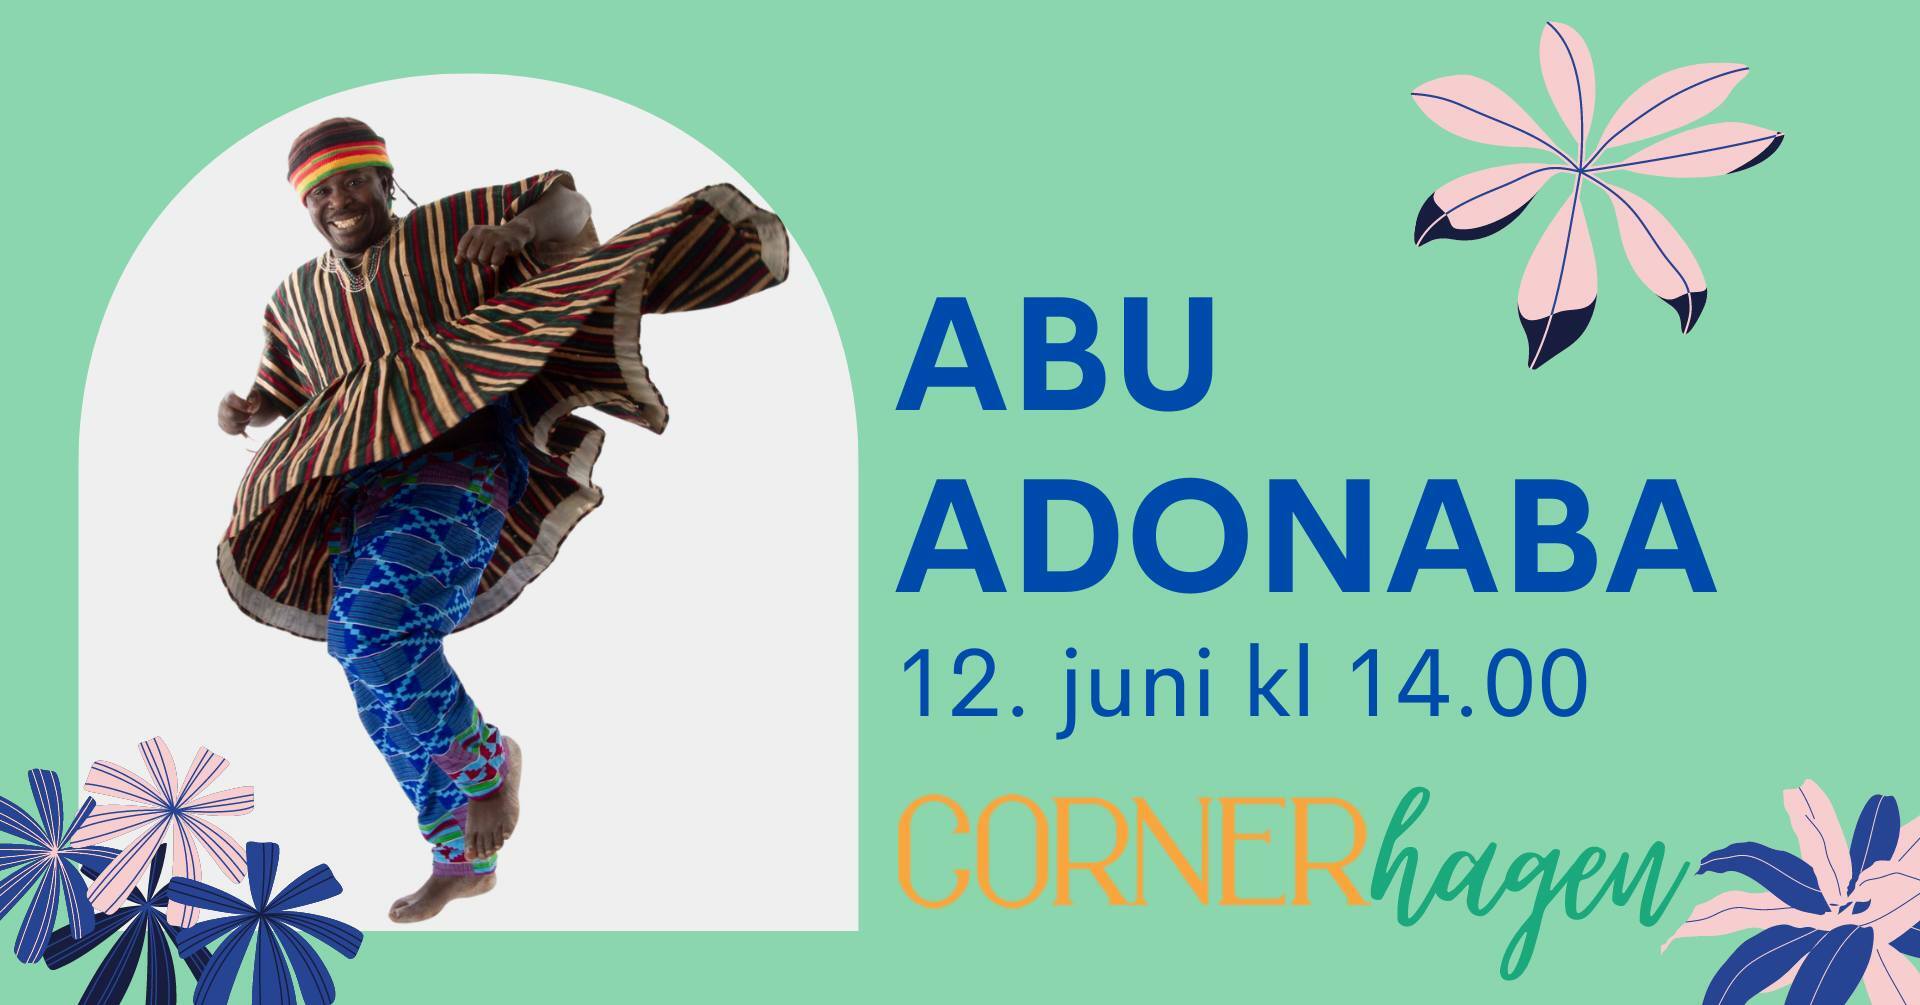 Abu Adonaba i Cornerhagen  - Stas Artist 